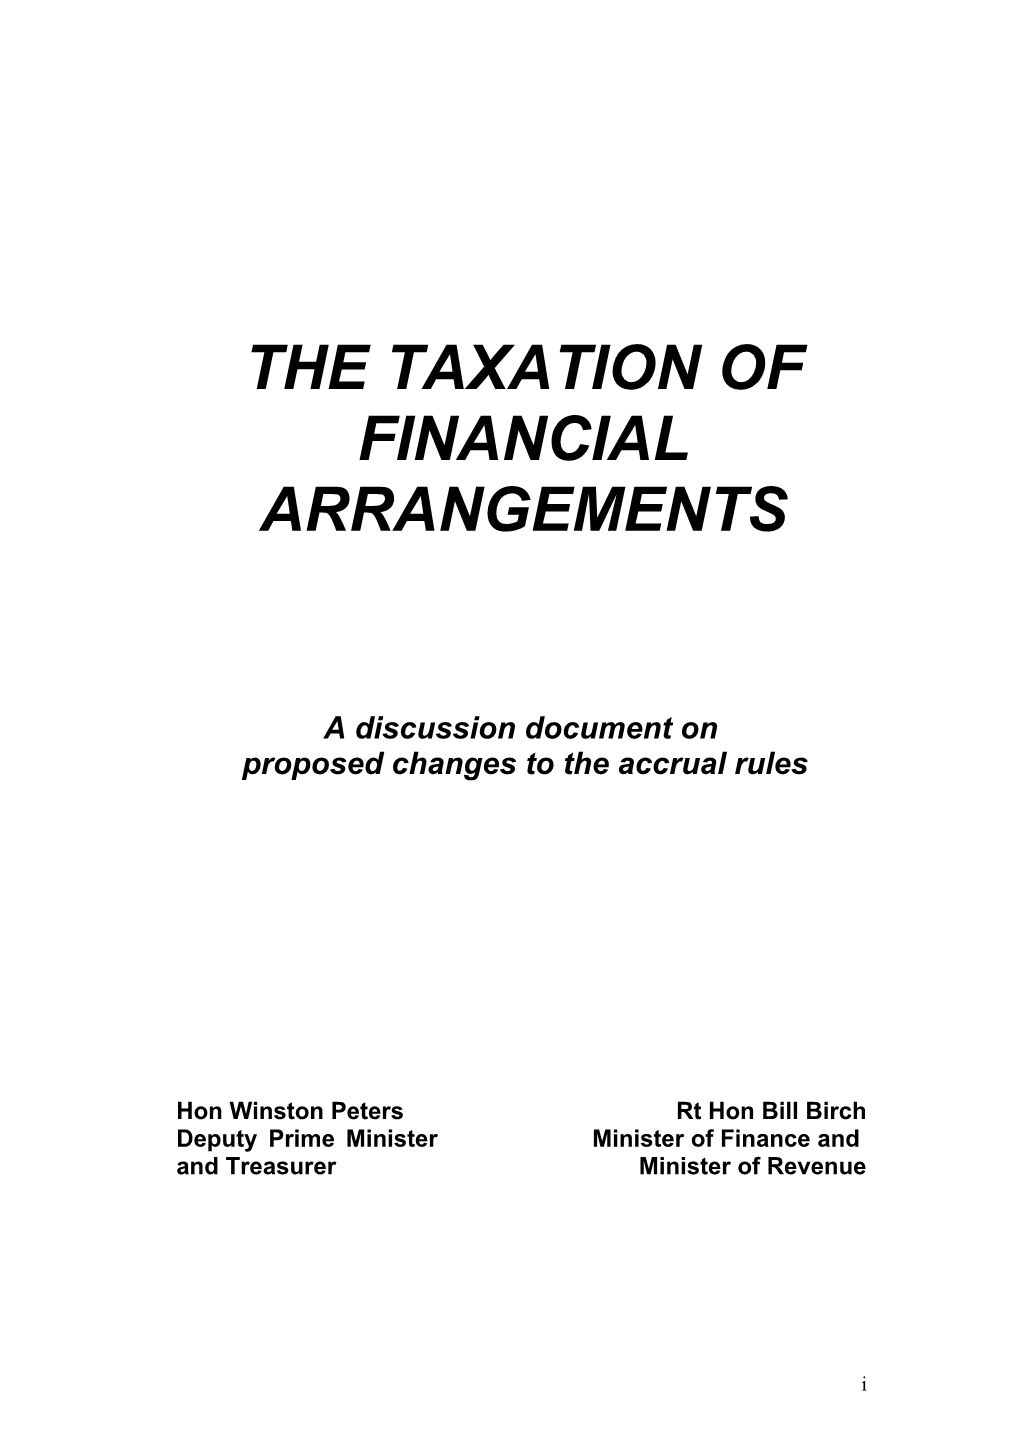 The Taxation of Financial Arrangements